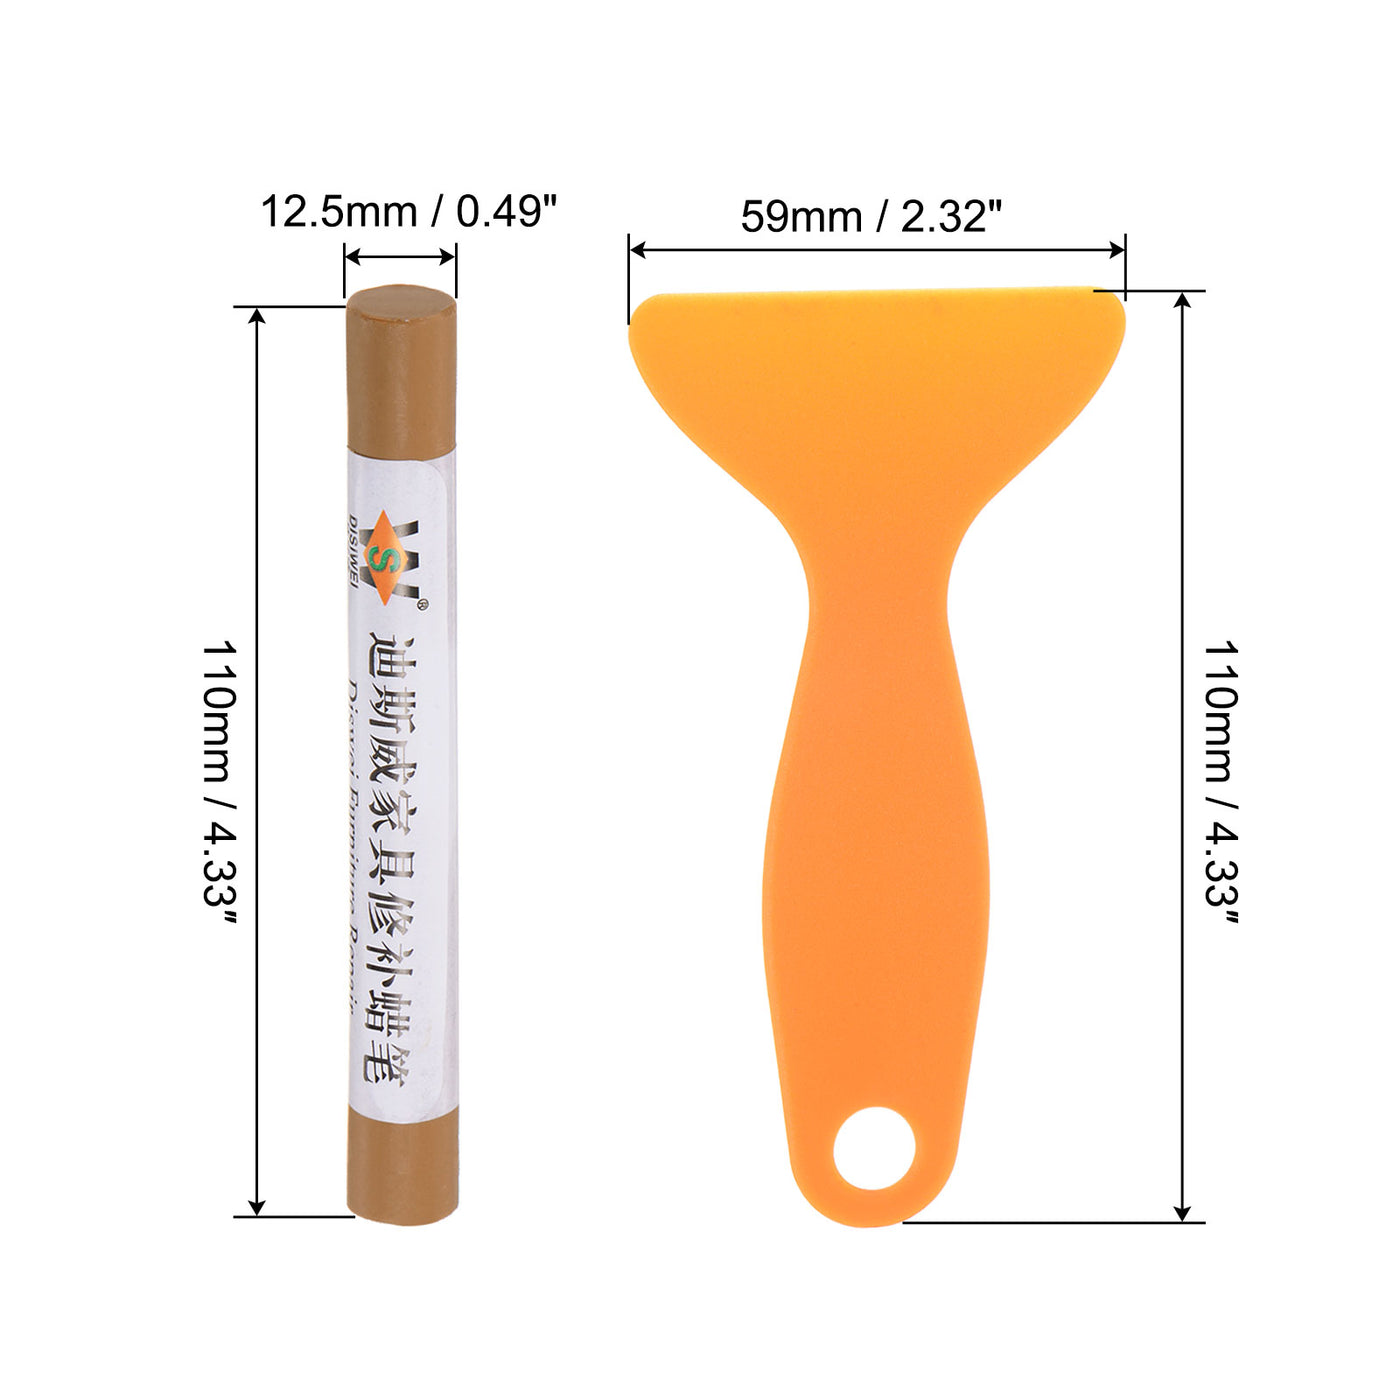 Harfington Wood Furniture Repair Kit 3pcs Markers with Spatula, Cream Orange